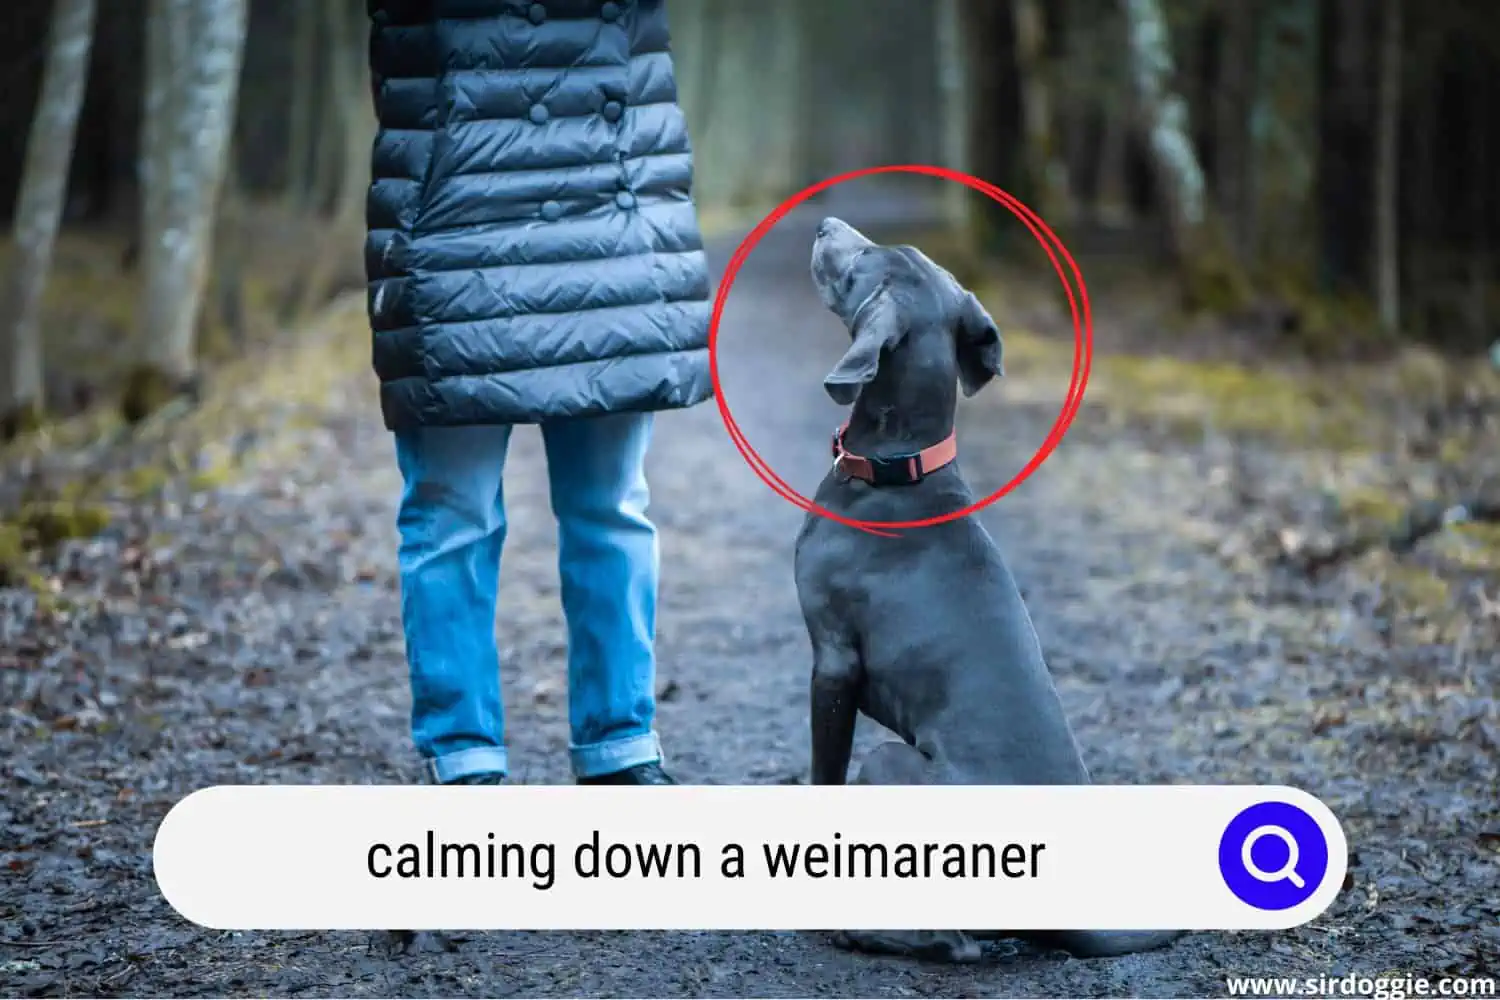 Owner calming down a Weimaraner dog